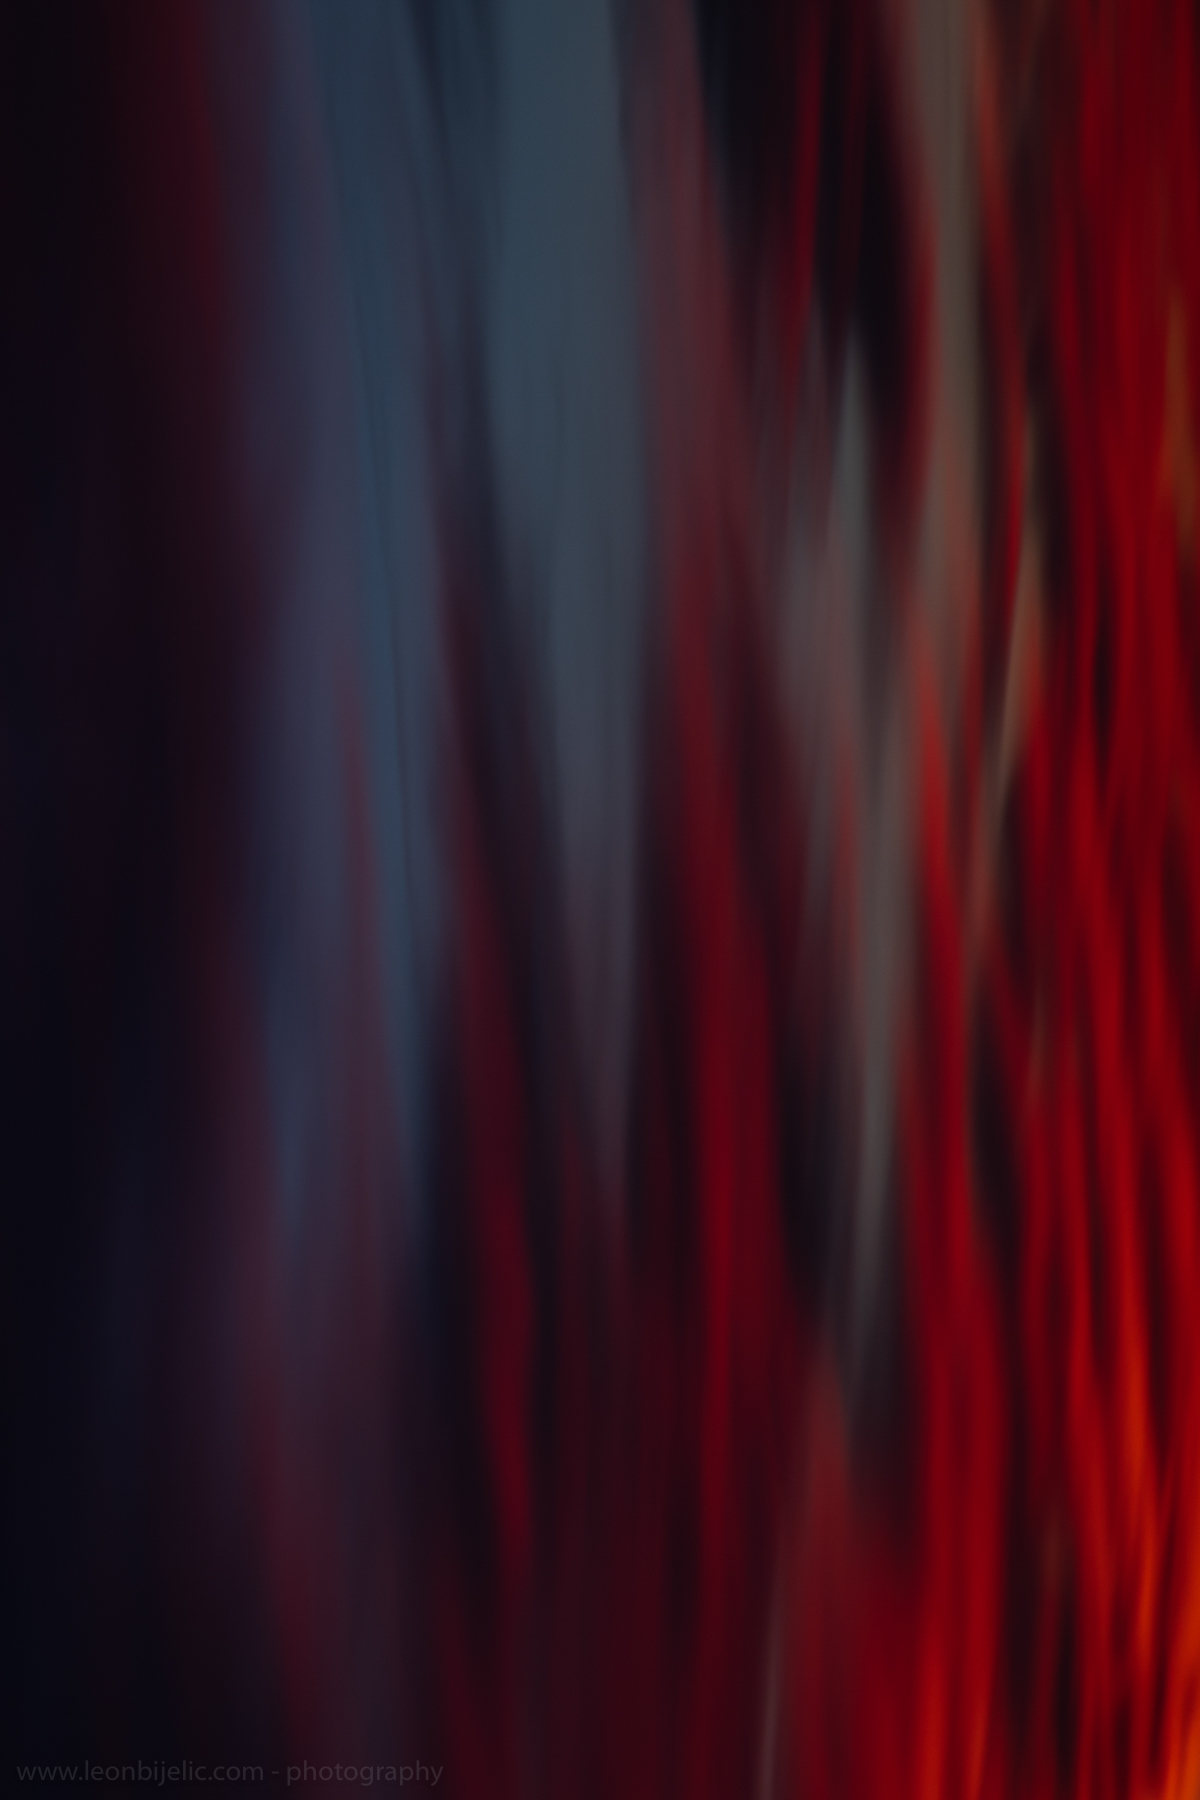 RED SUNSET COLOR COLORS PHOTO PHOTOGRAPHY - ABSTRACT - LEON BIJELIC PHOTOGRAPHER - BEAUTIFUL AMAZING BLUE SKY SUNDOWN